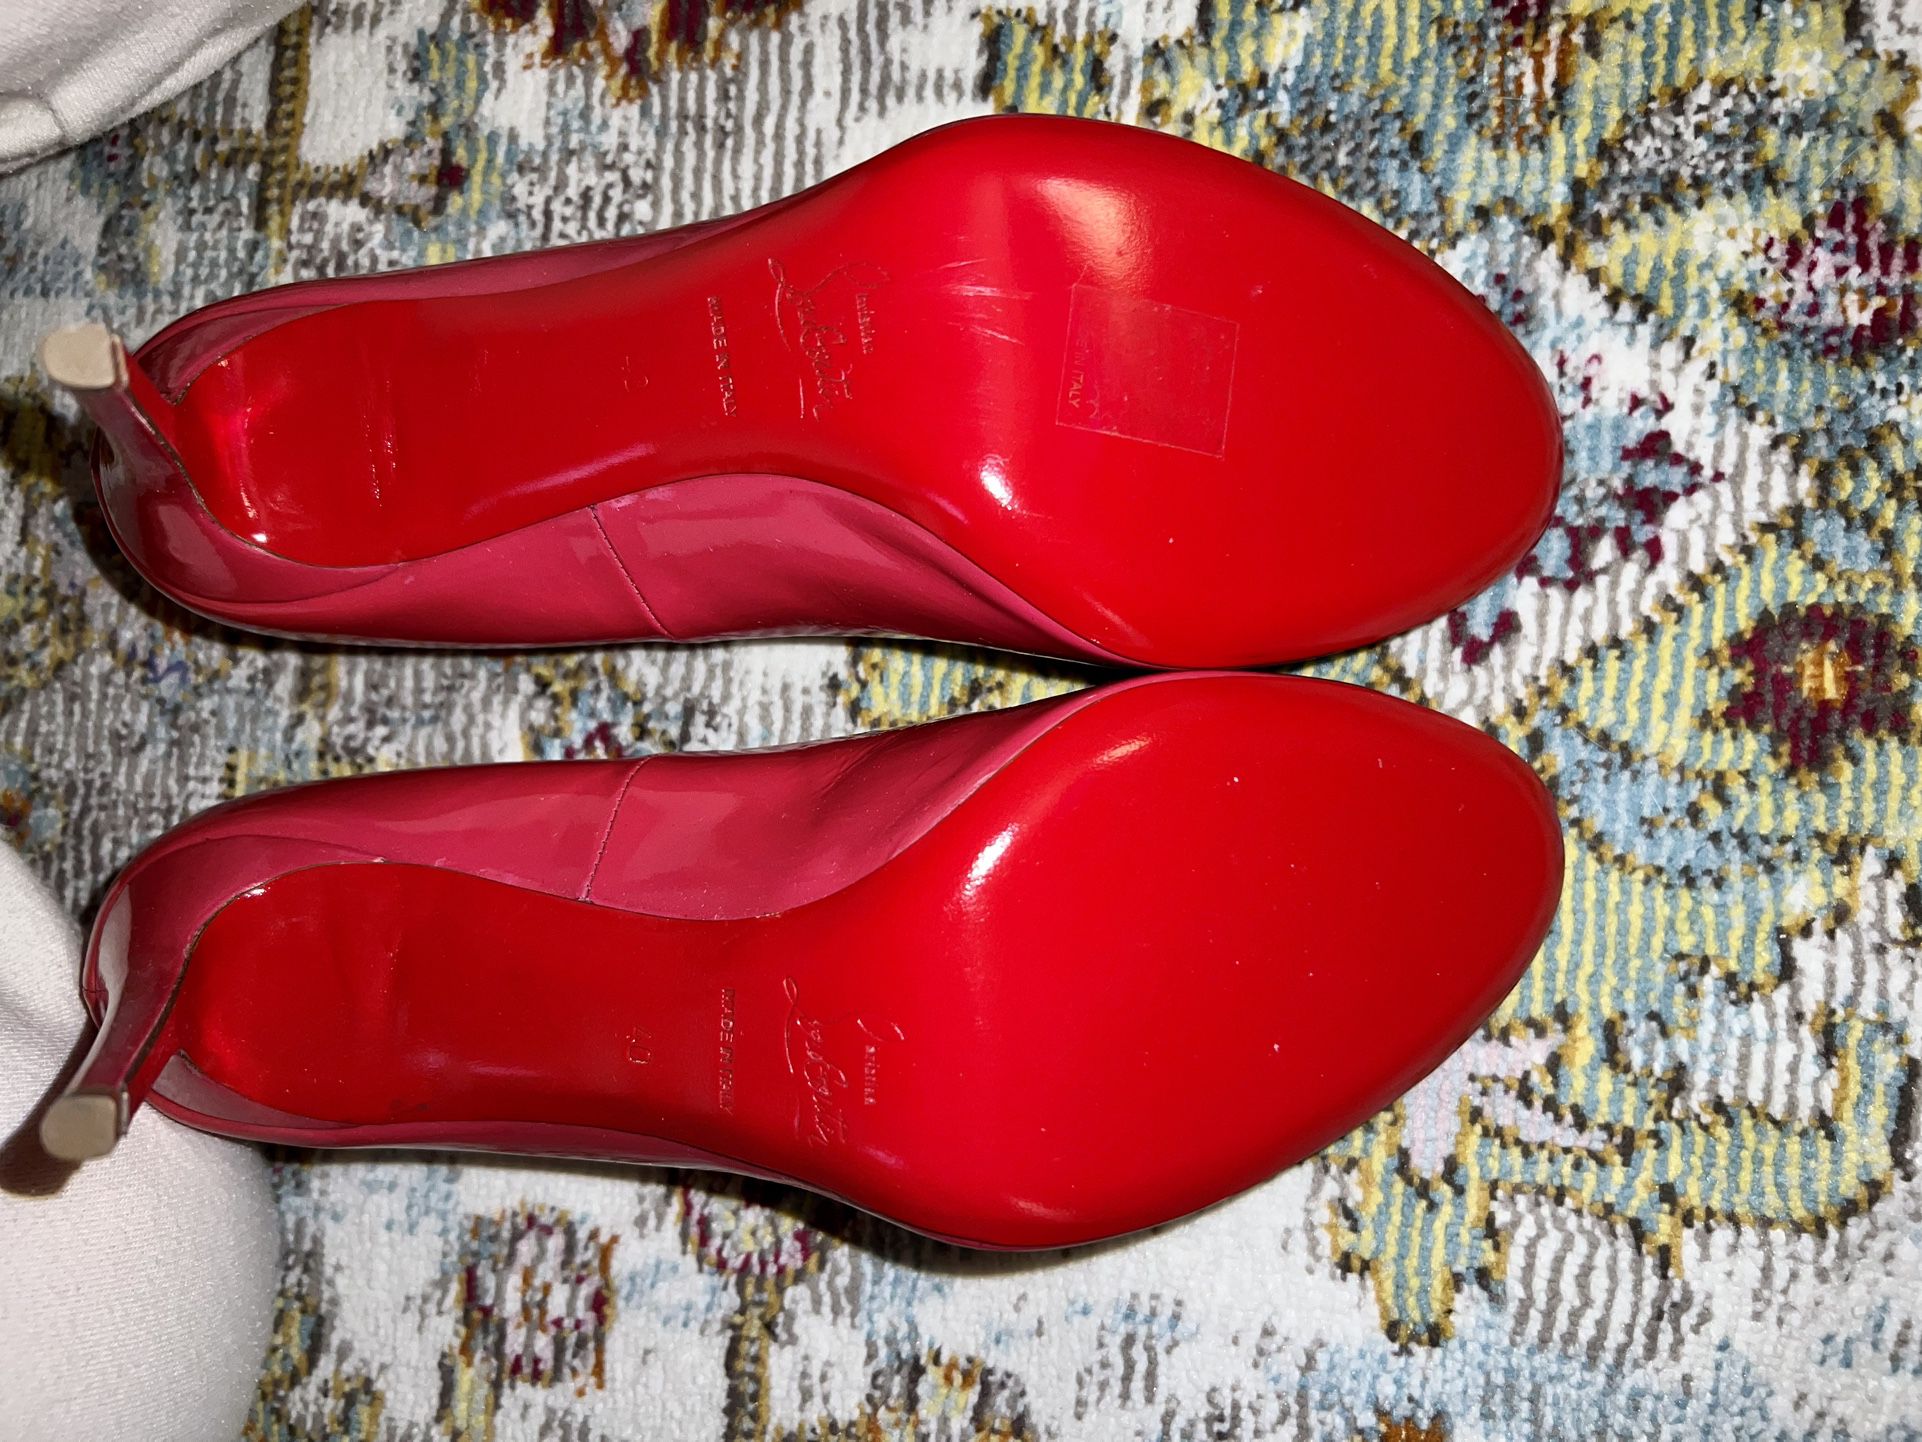 Fuschia/Berry Christian Louboutin Pumppie 85mm Leather Heels - Size 40